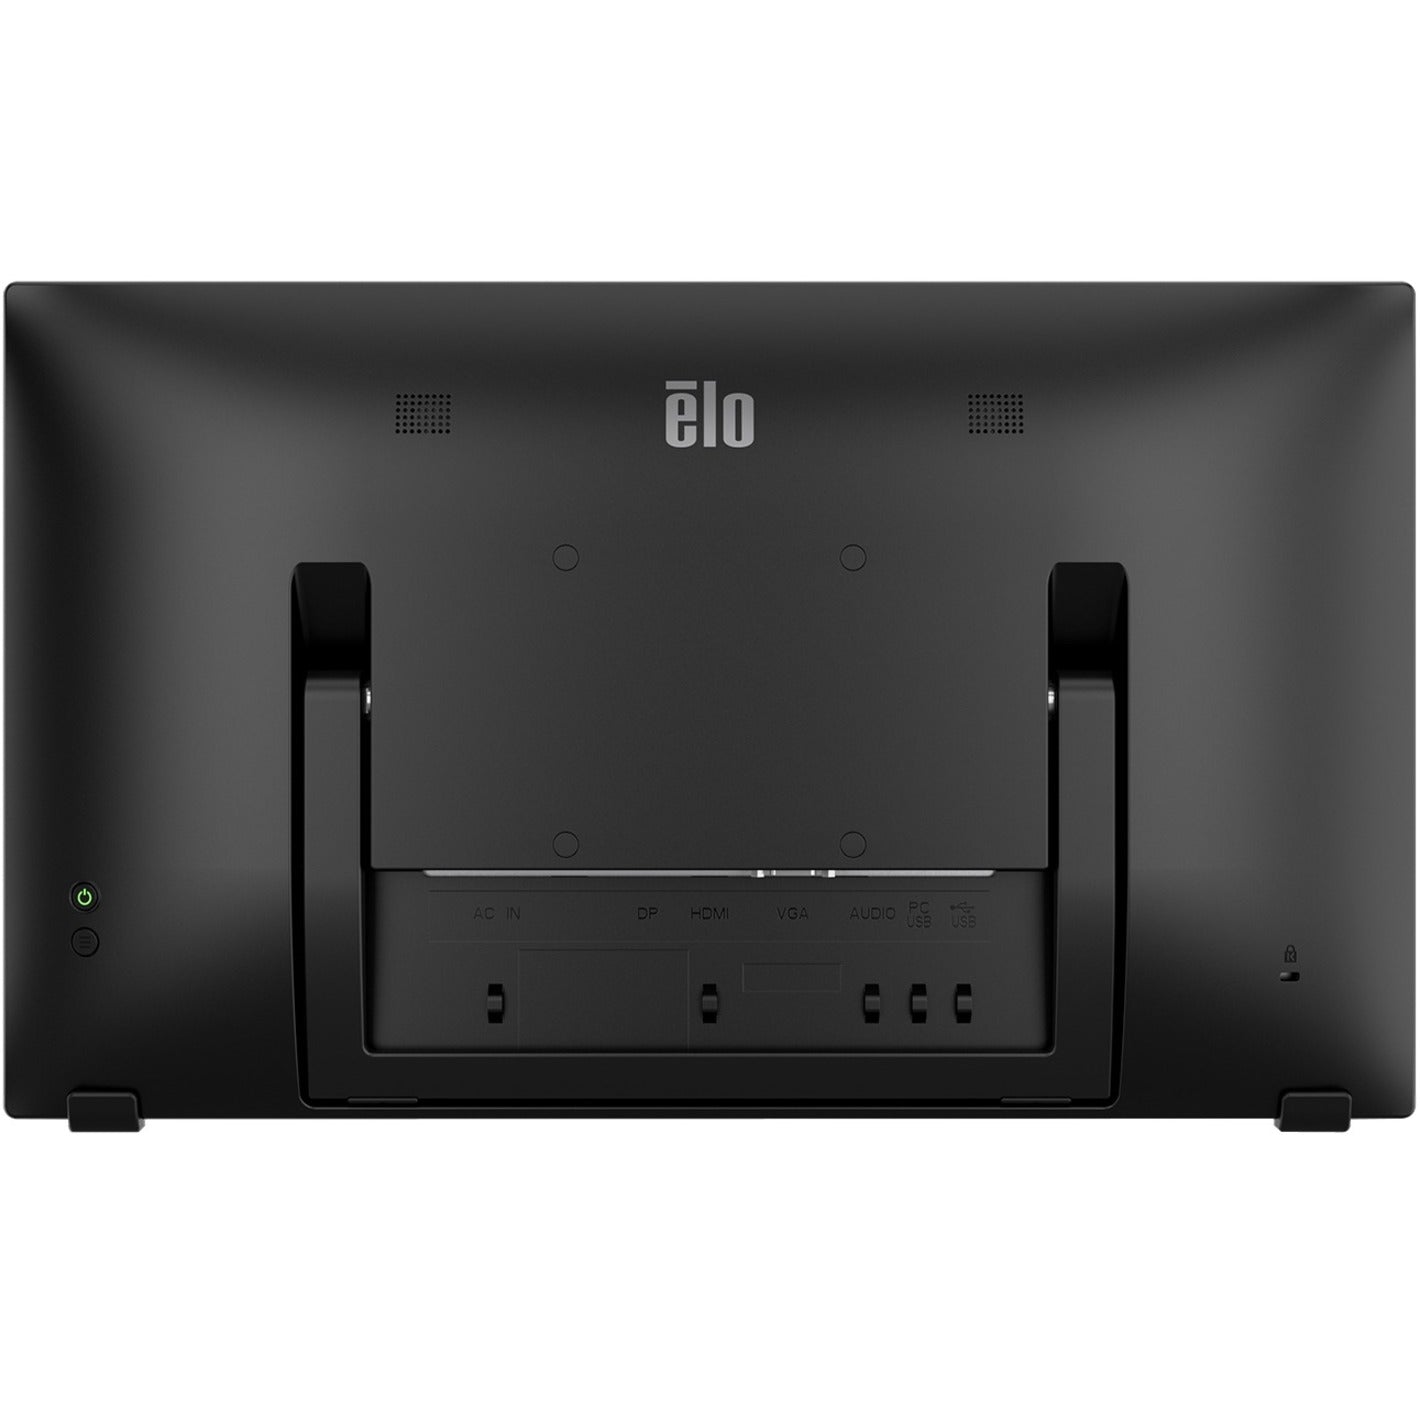 Elo E510459 2470L 24" Full HD Touchscreen Monitor, 10-Touch, Black